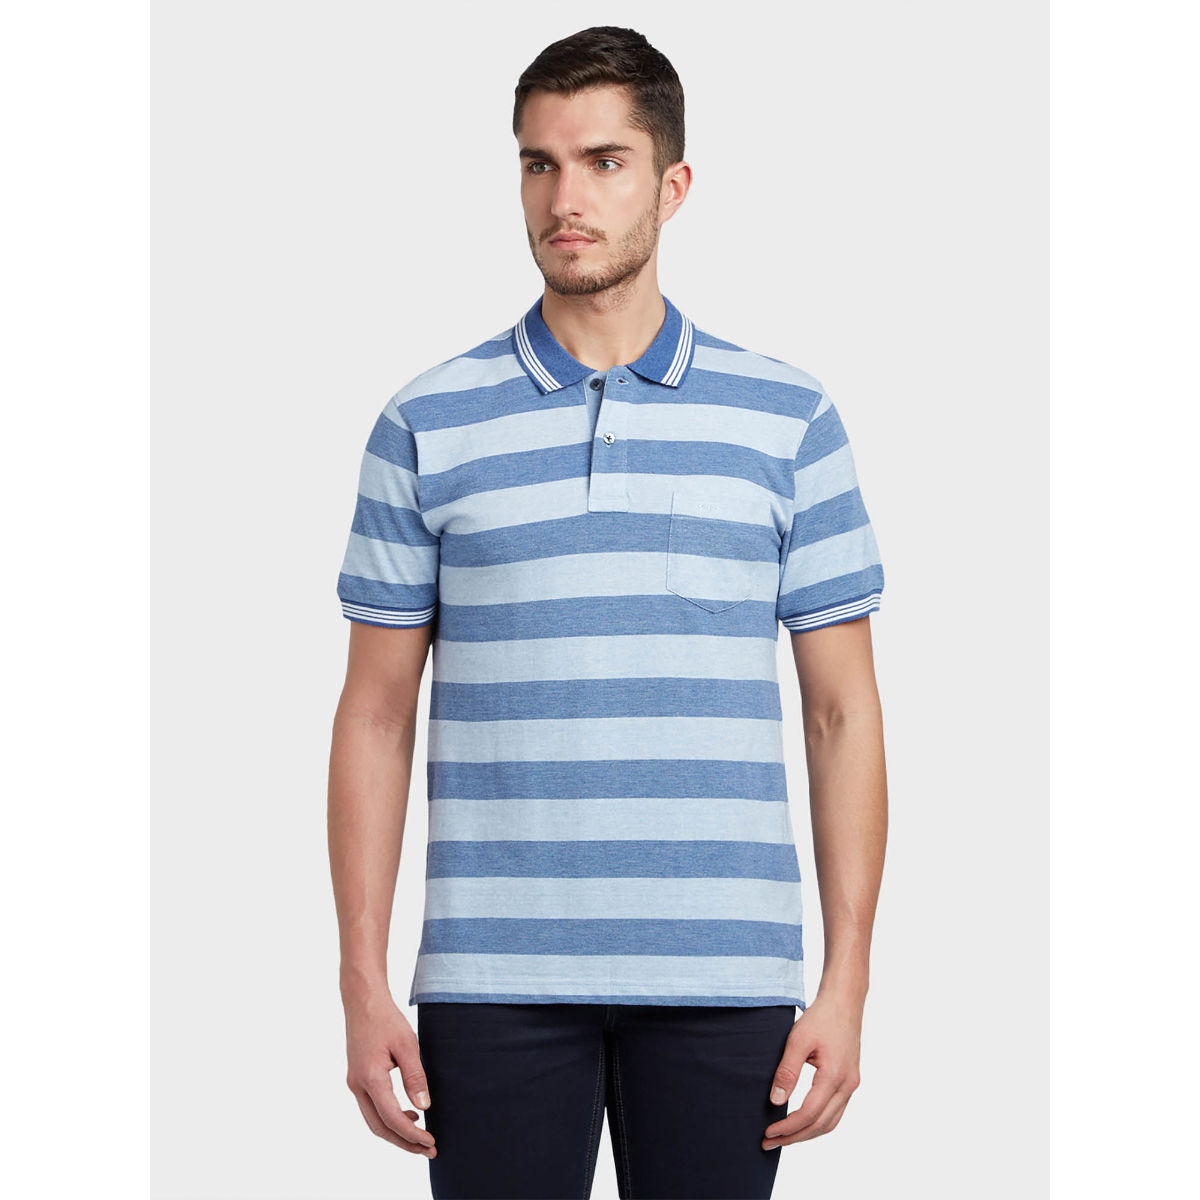 ColorPlus Medium Blue Striped T-Shirt (S)